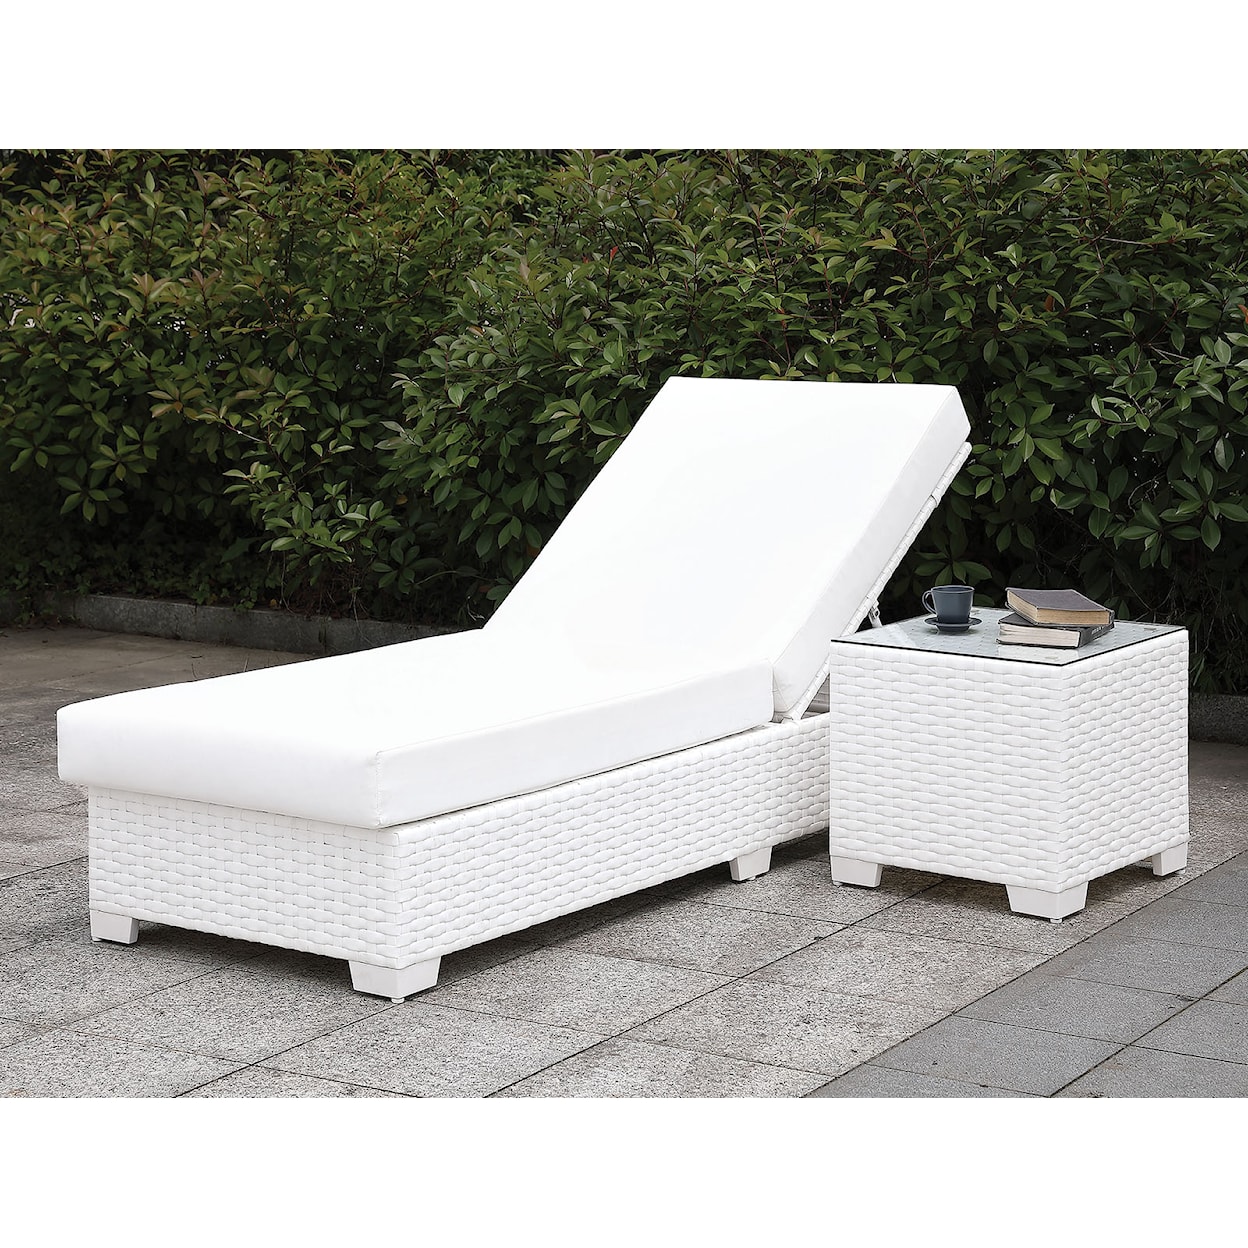 Furniture of America Somani Adjustable Chaise